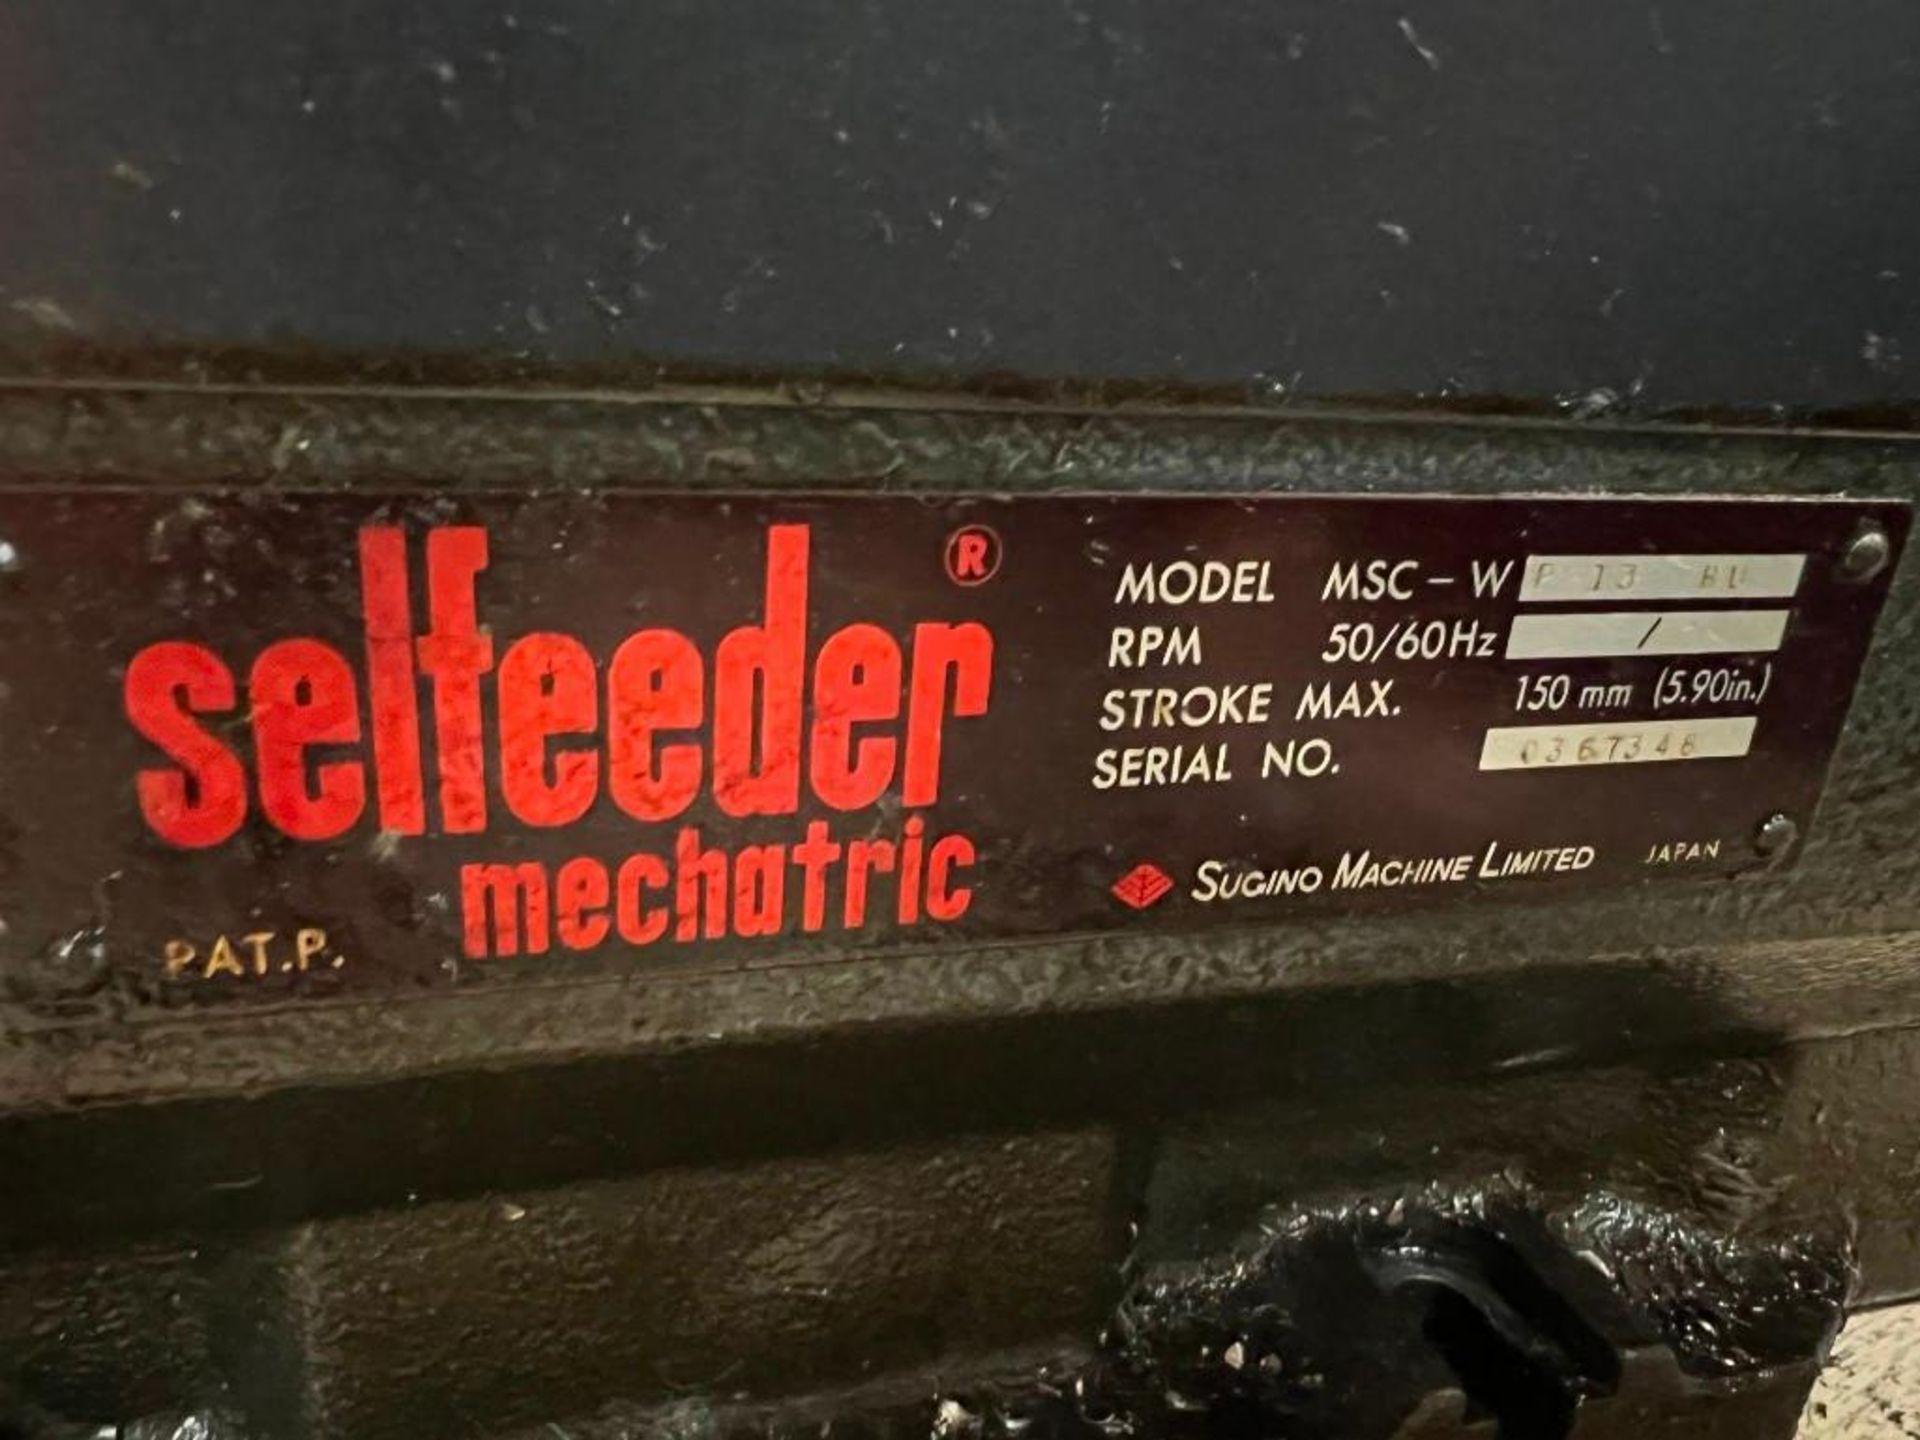 Selfeeder Mechatric Drilling Unit Mod#MSC-WP 13 BU - Image 2 of 3